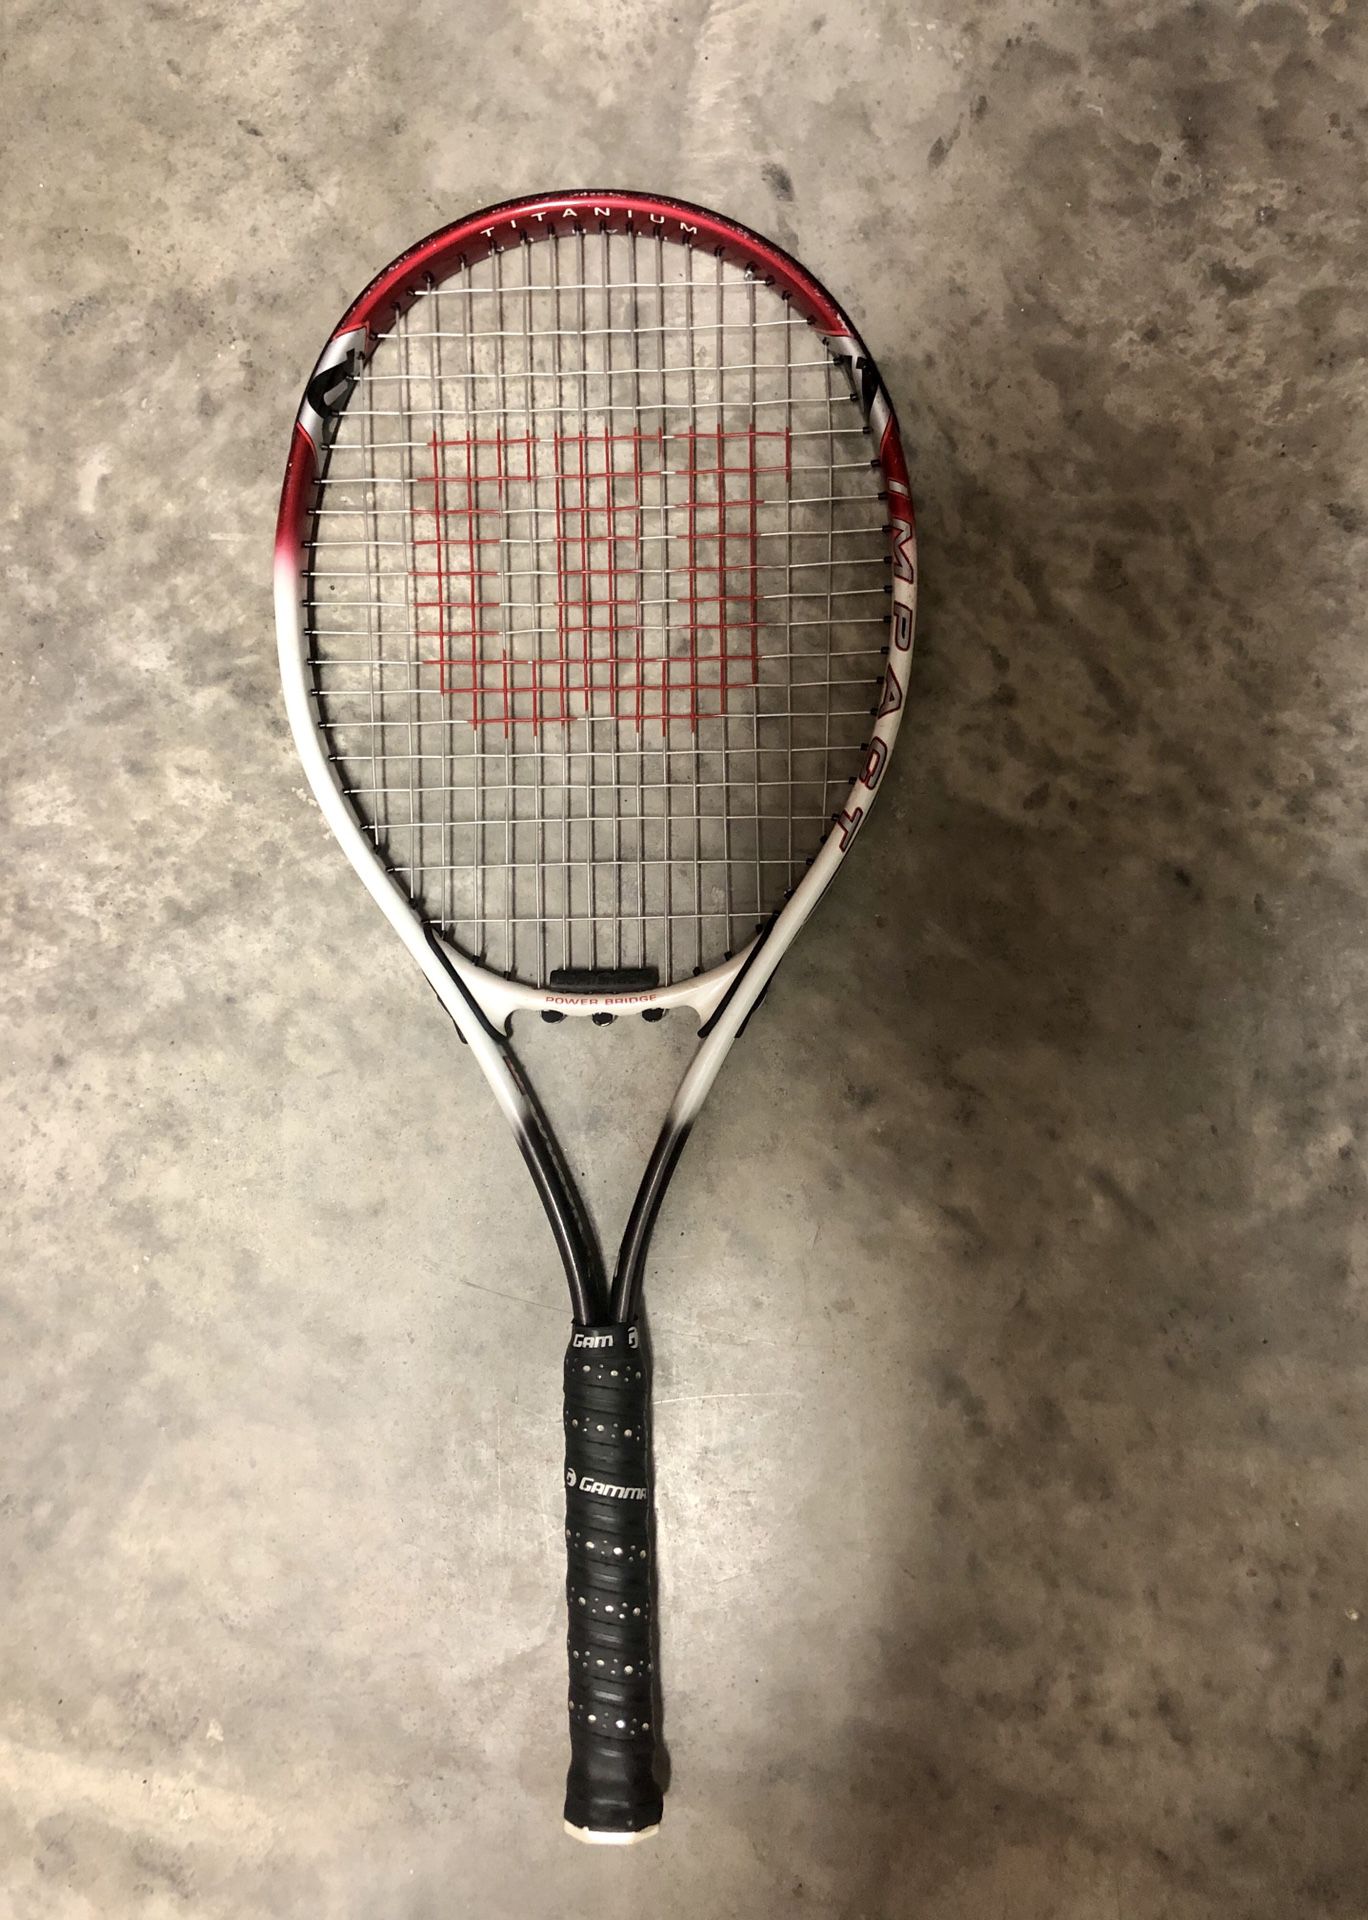 Wilson tennis racket no flaws